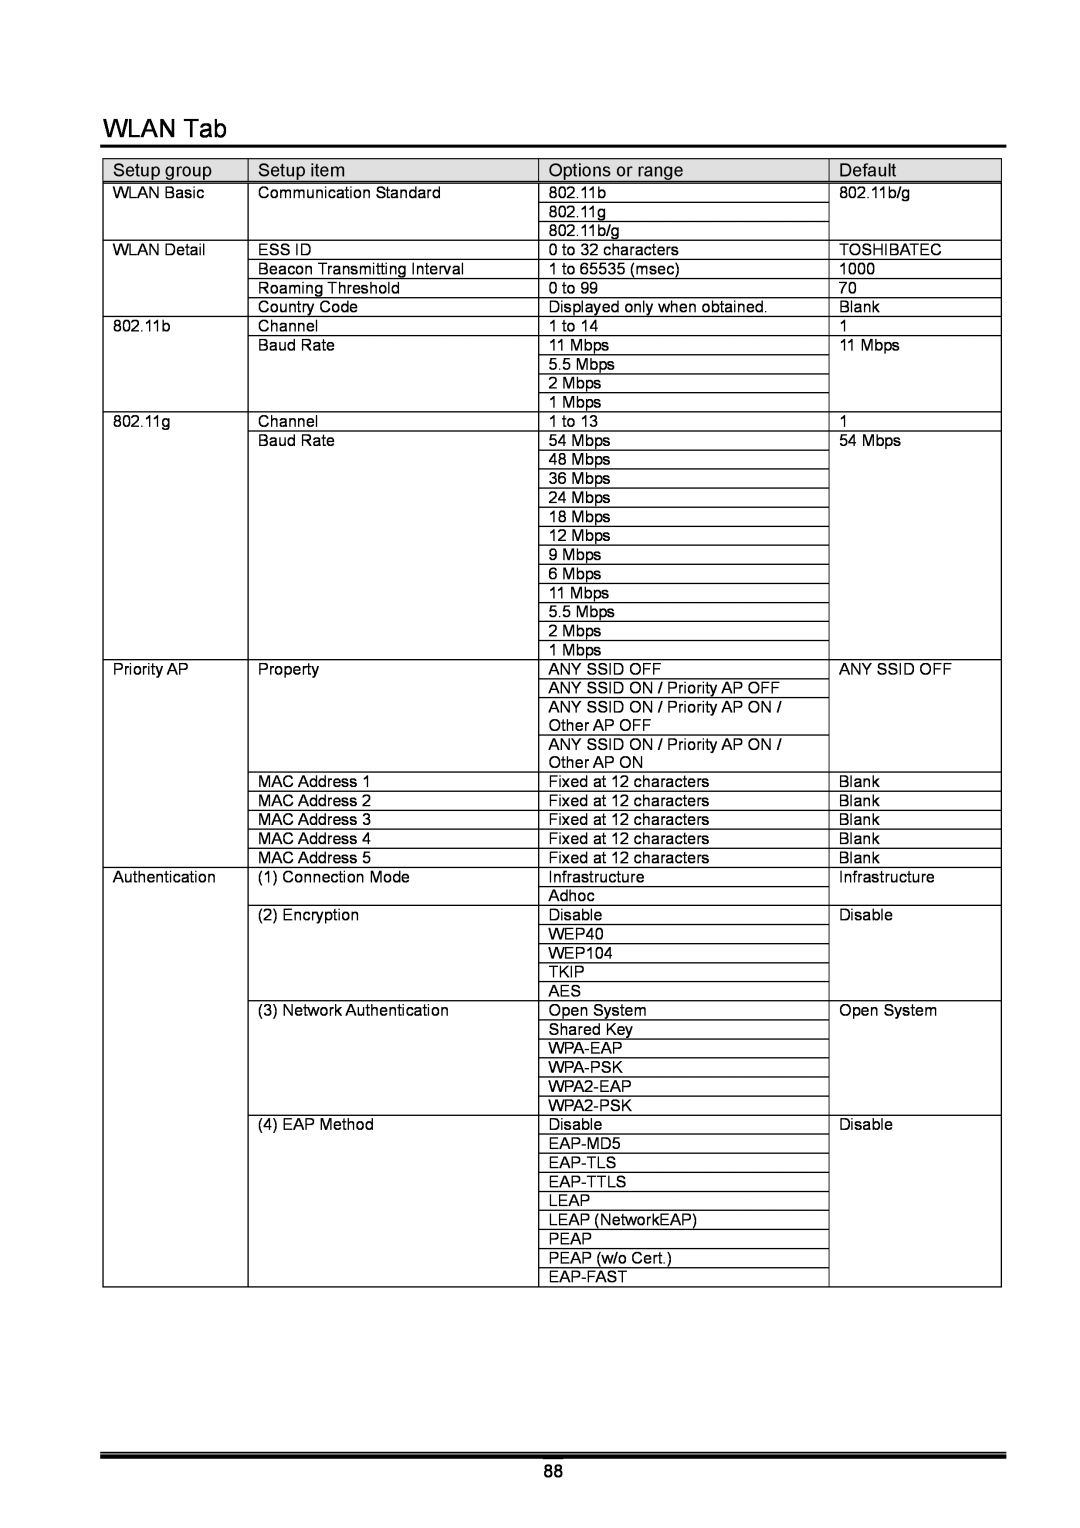 Toshiba B-EX operation manual WLAN Tab, Setup group, Setup item, Options or range, Default 